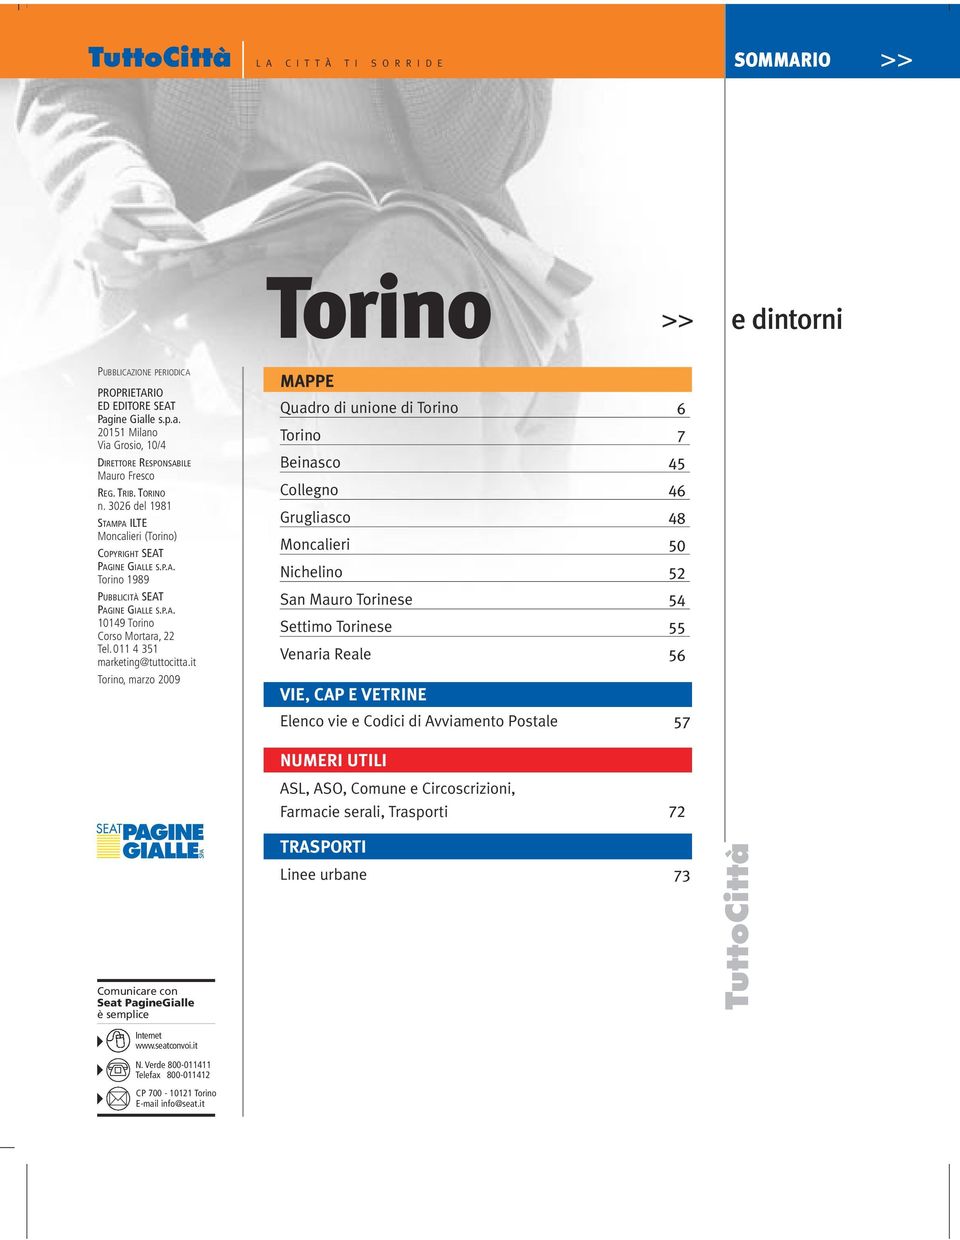 P.A. 10149 Torino Corso Mortara, 22 Tel.011 4 351 marketing@tuttocitta.